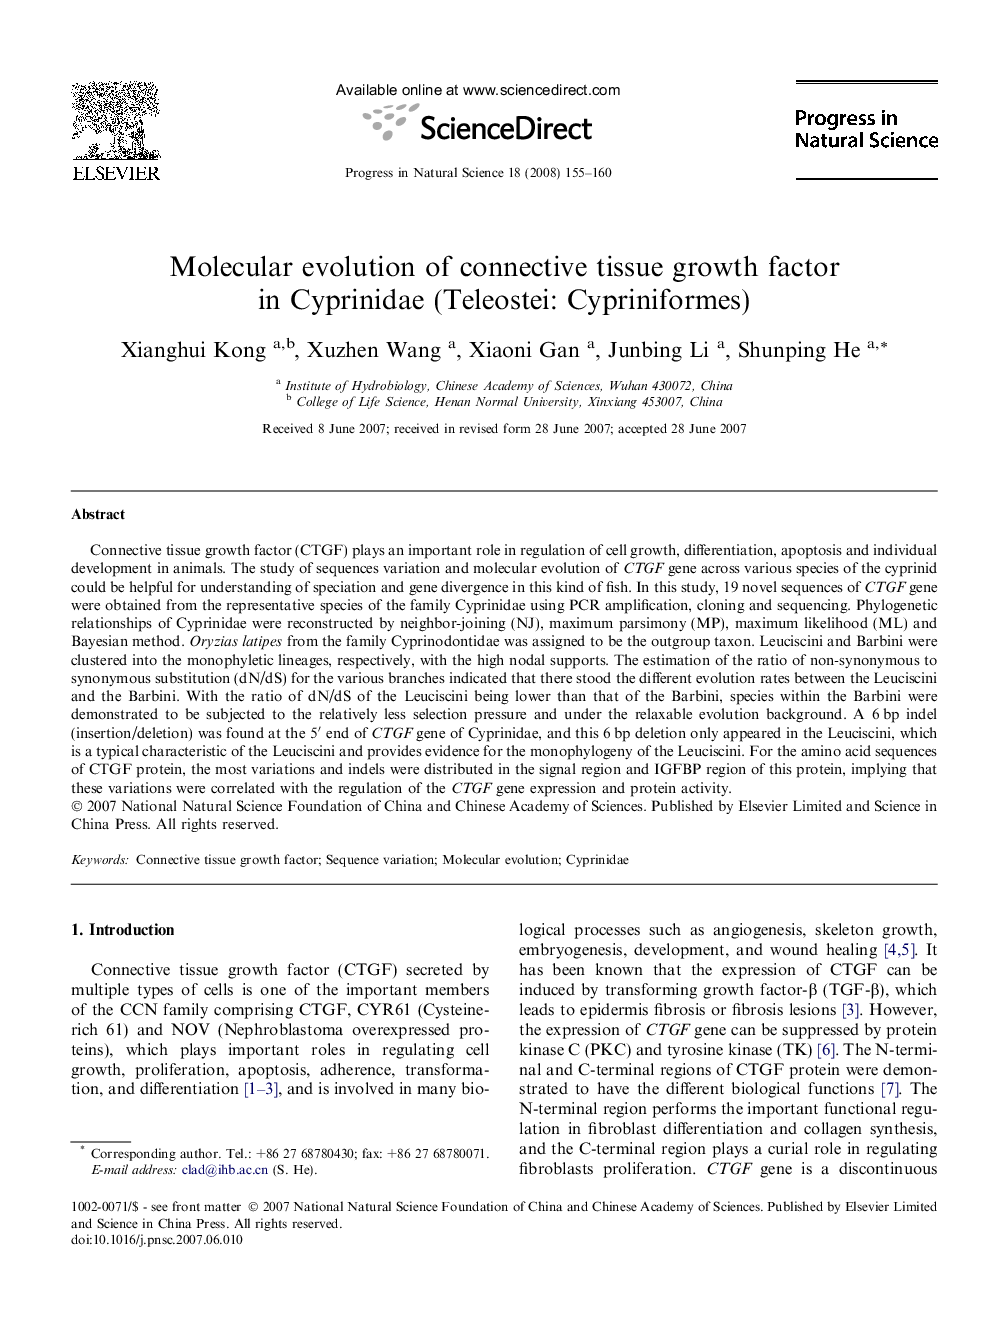 Molecular evolution of connective tissue growth factor in Cyprinidae (Teleostei: Cypriniformes)